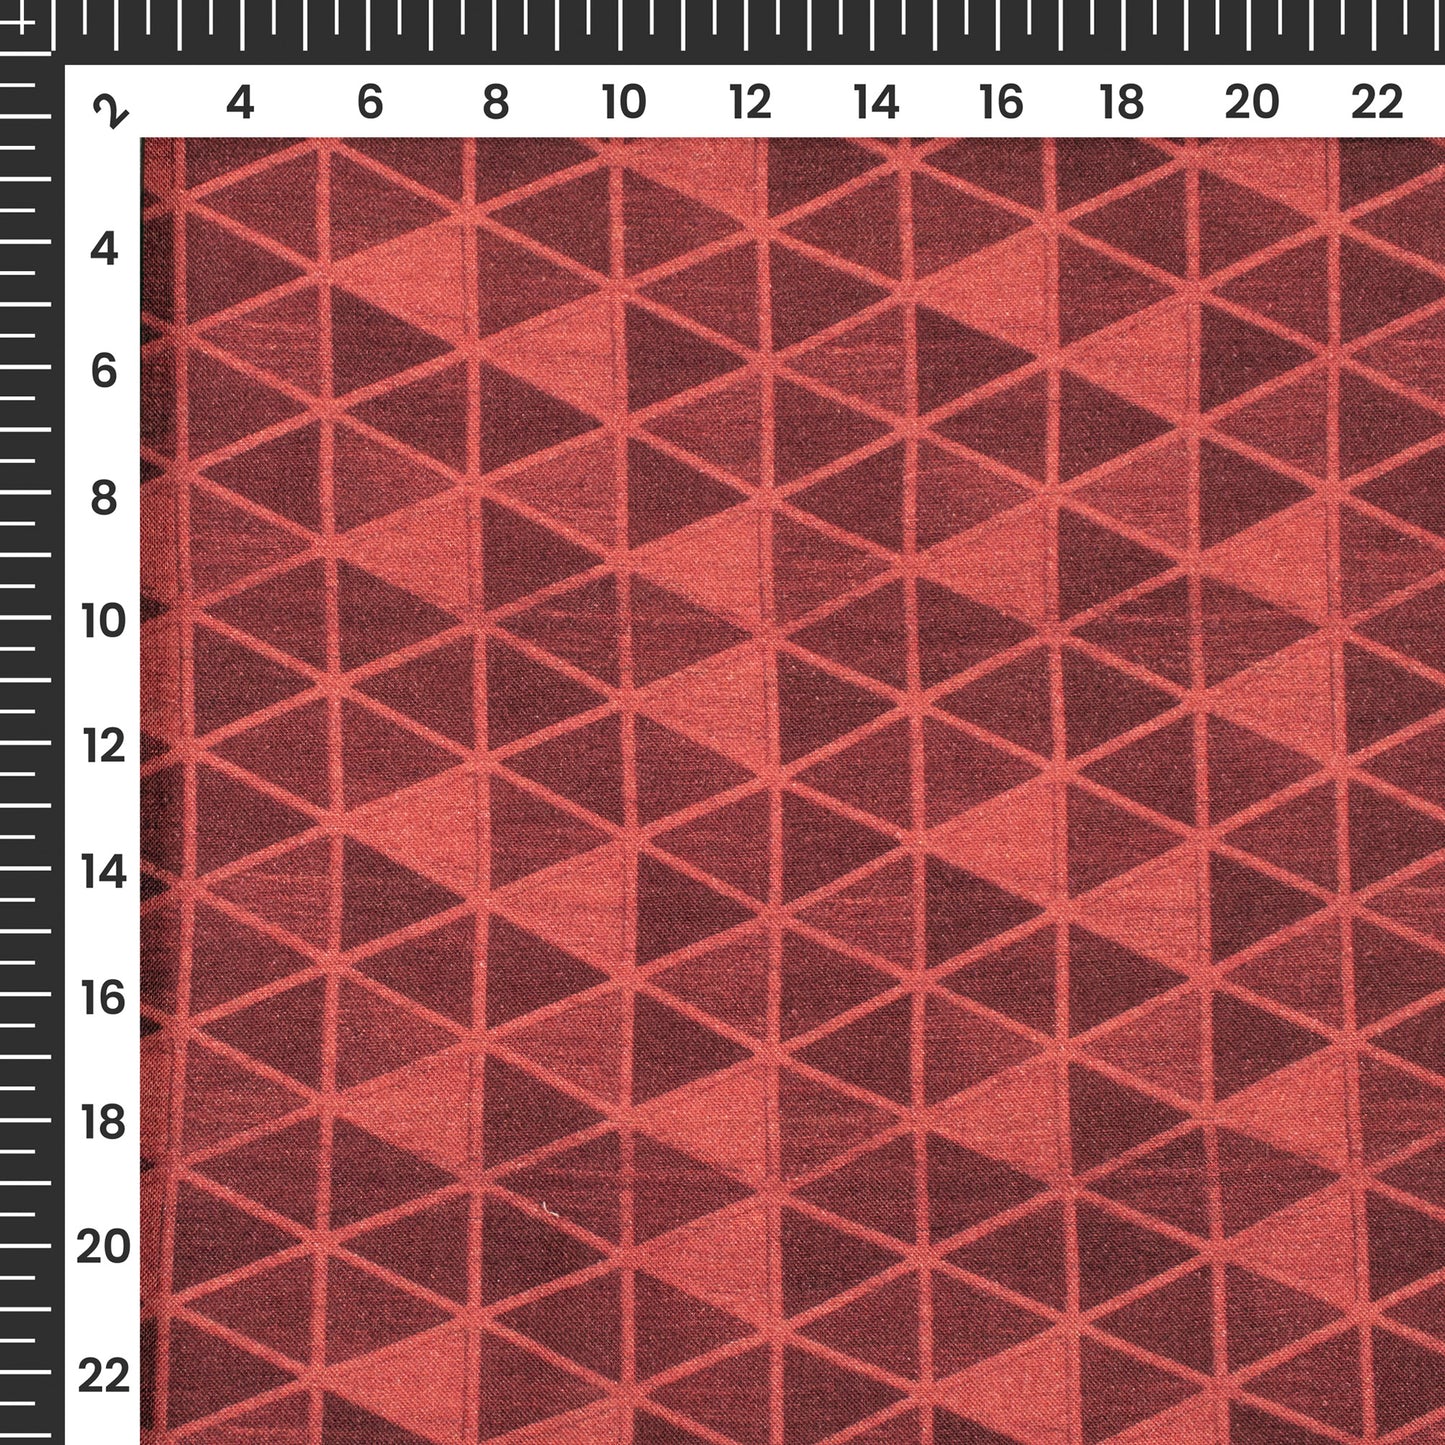 Rose Wood Geometric Digital Print Viscose Rayon Fabric (Width 58 Inches)